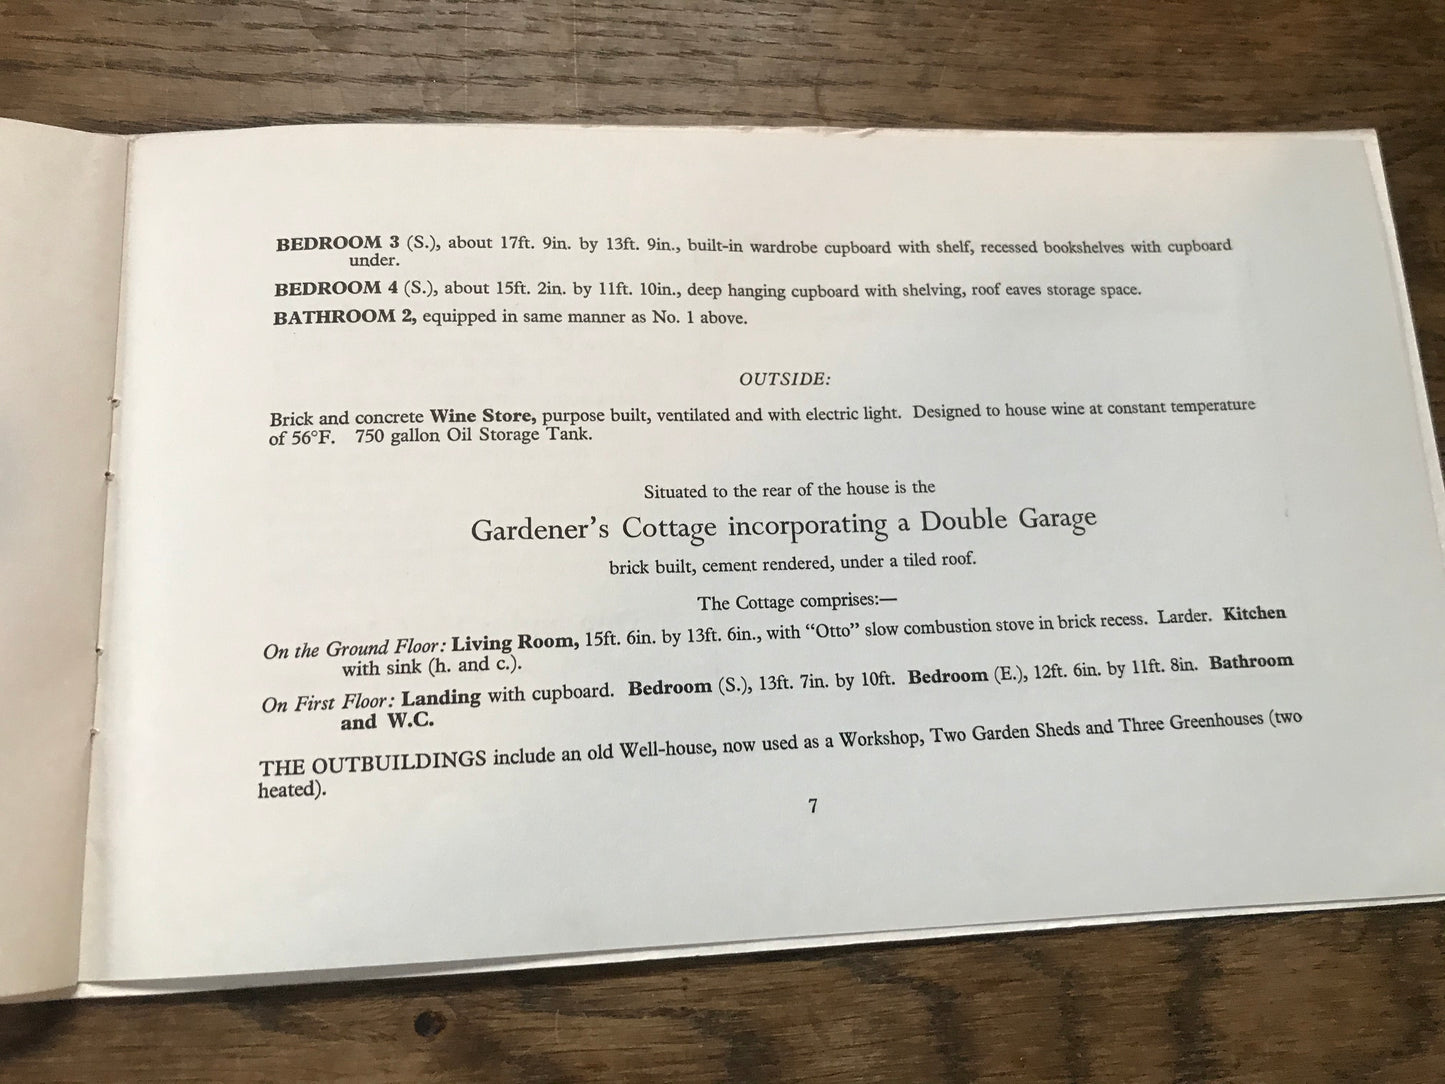 Bushy Croft - Coldharbour, Dorking 1966 Sales Particulars